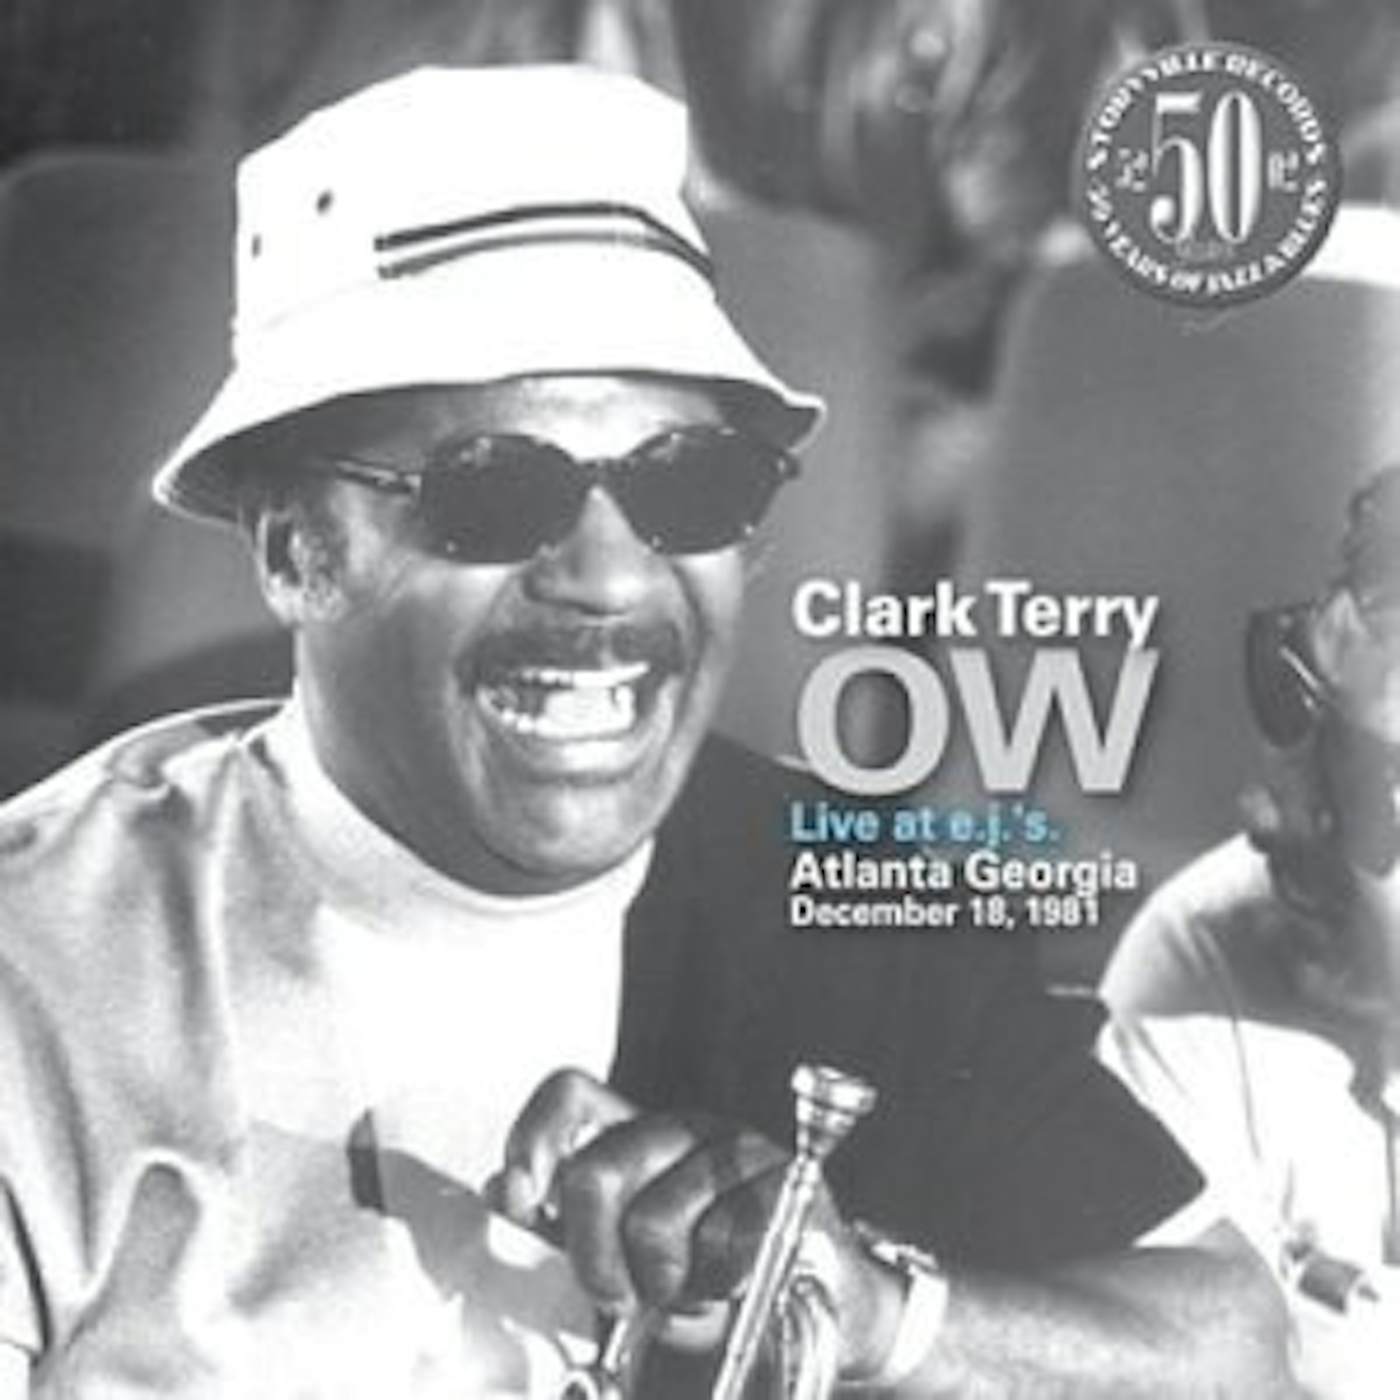 Clark Terry OW CD